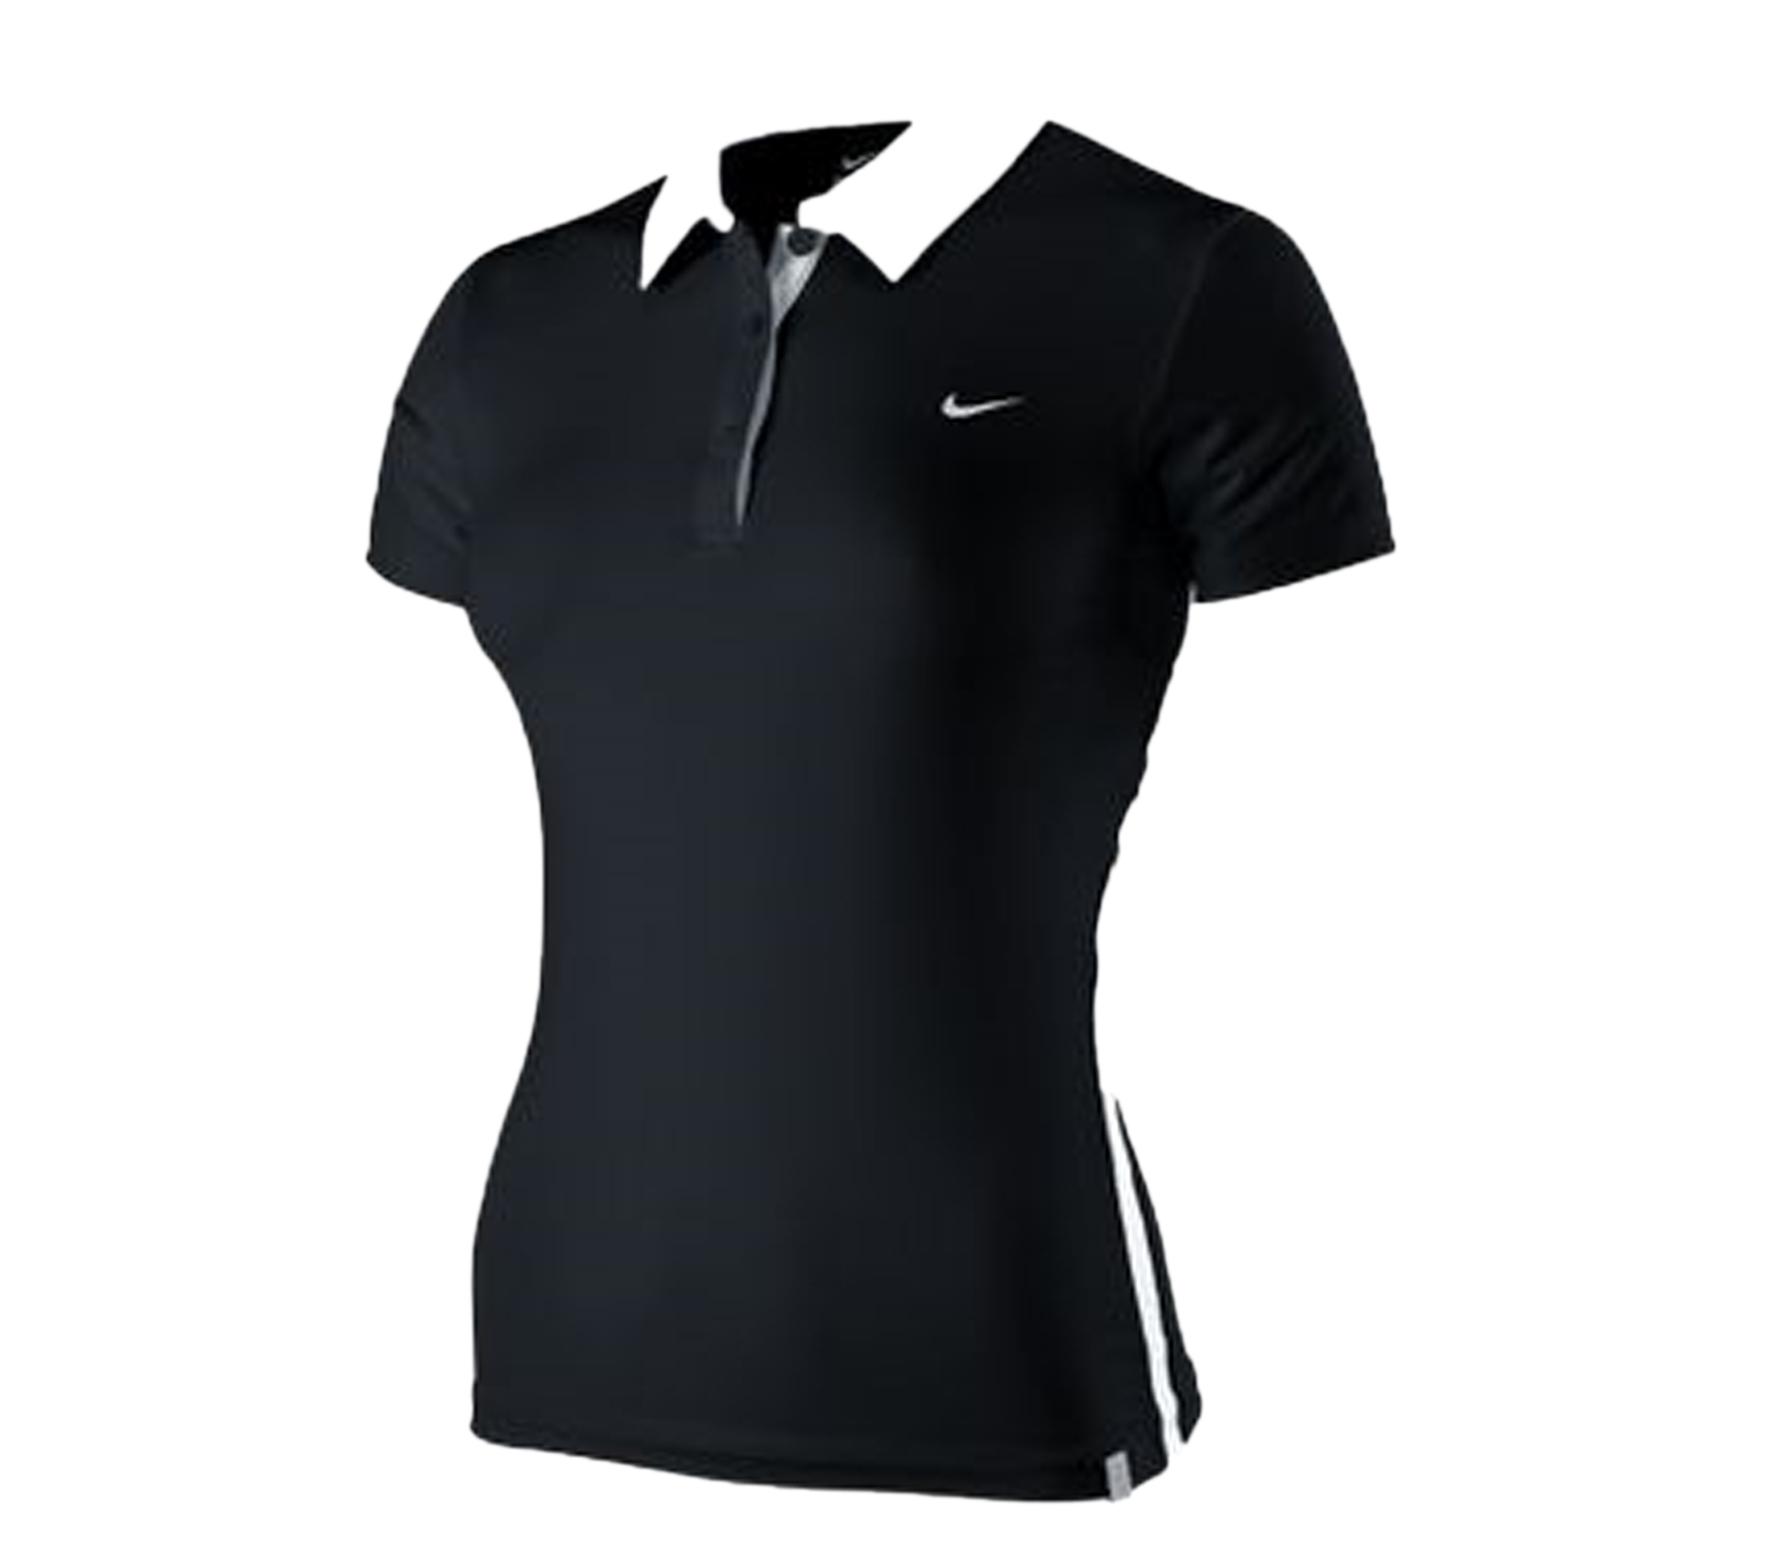 Foto Nike - Border Polo - negro/blanco - Ropa de tenis